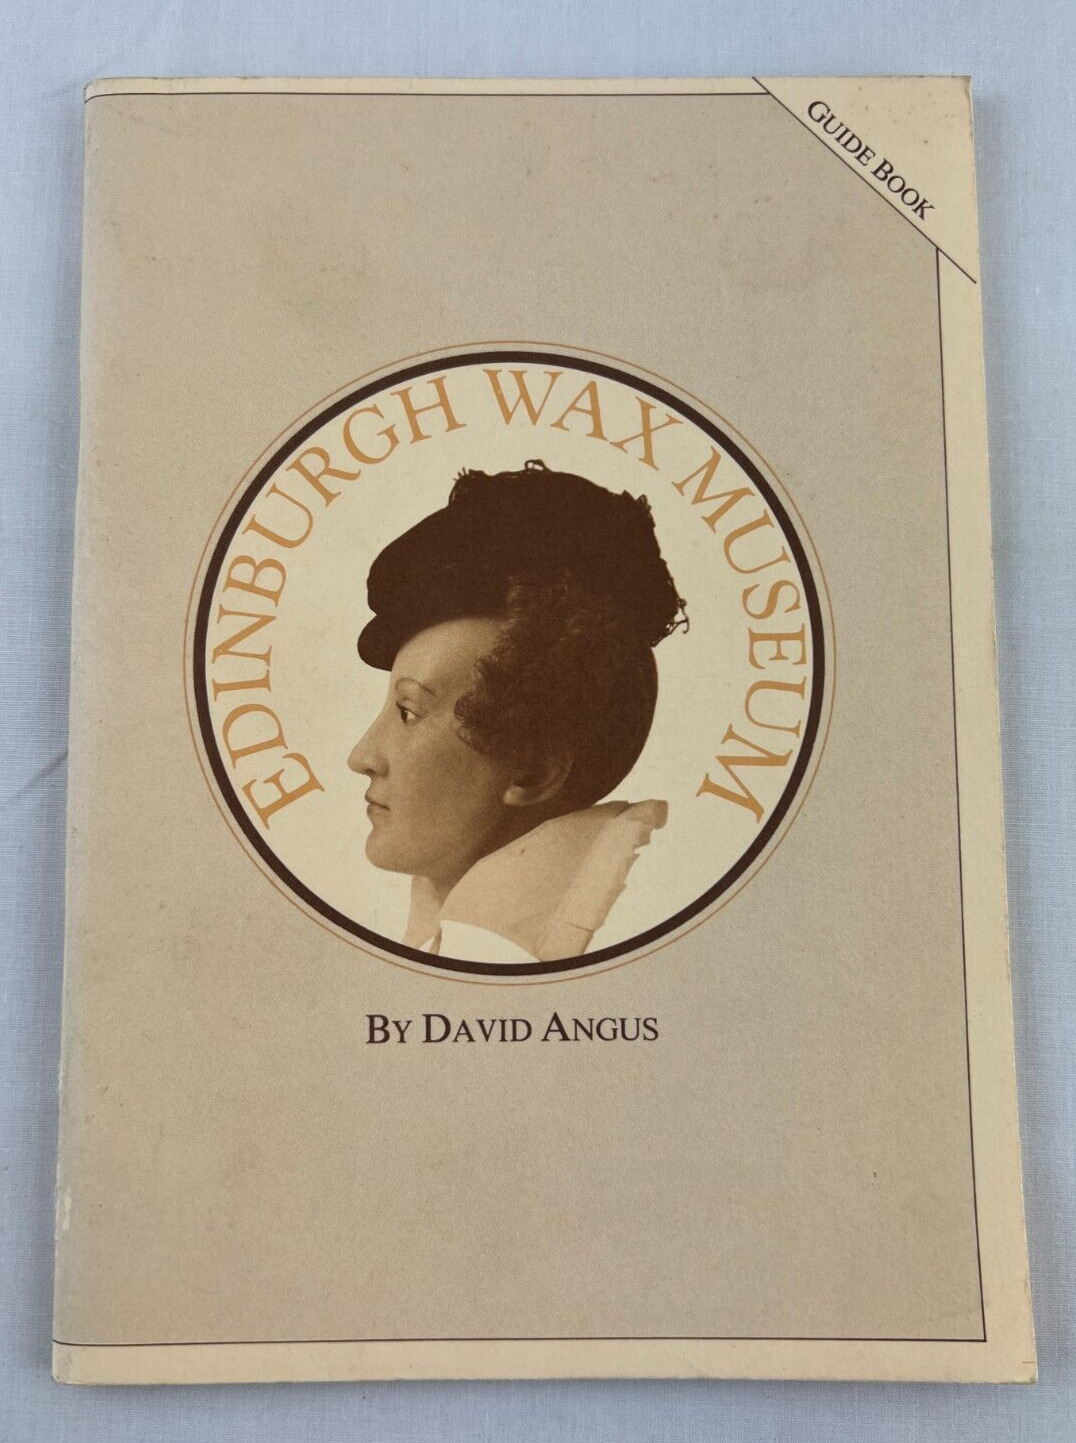 Edinburgh Wax Museum by David Angus, Vintage Scotland Souvenir Guide Booklet